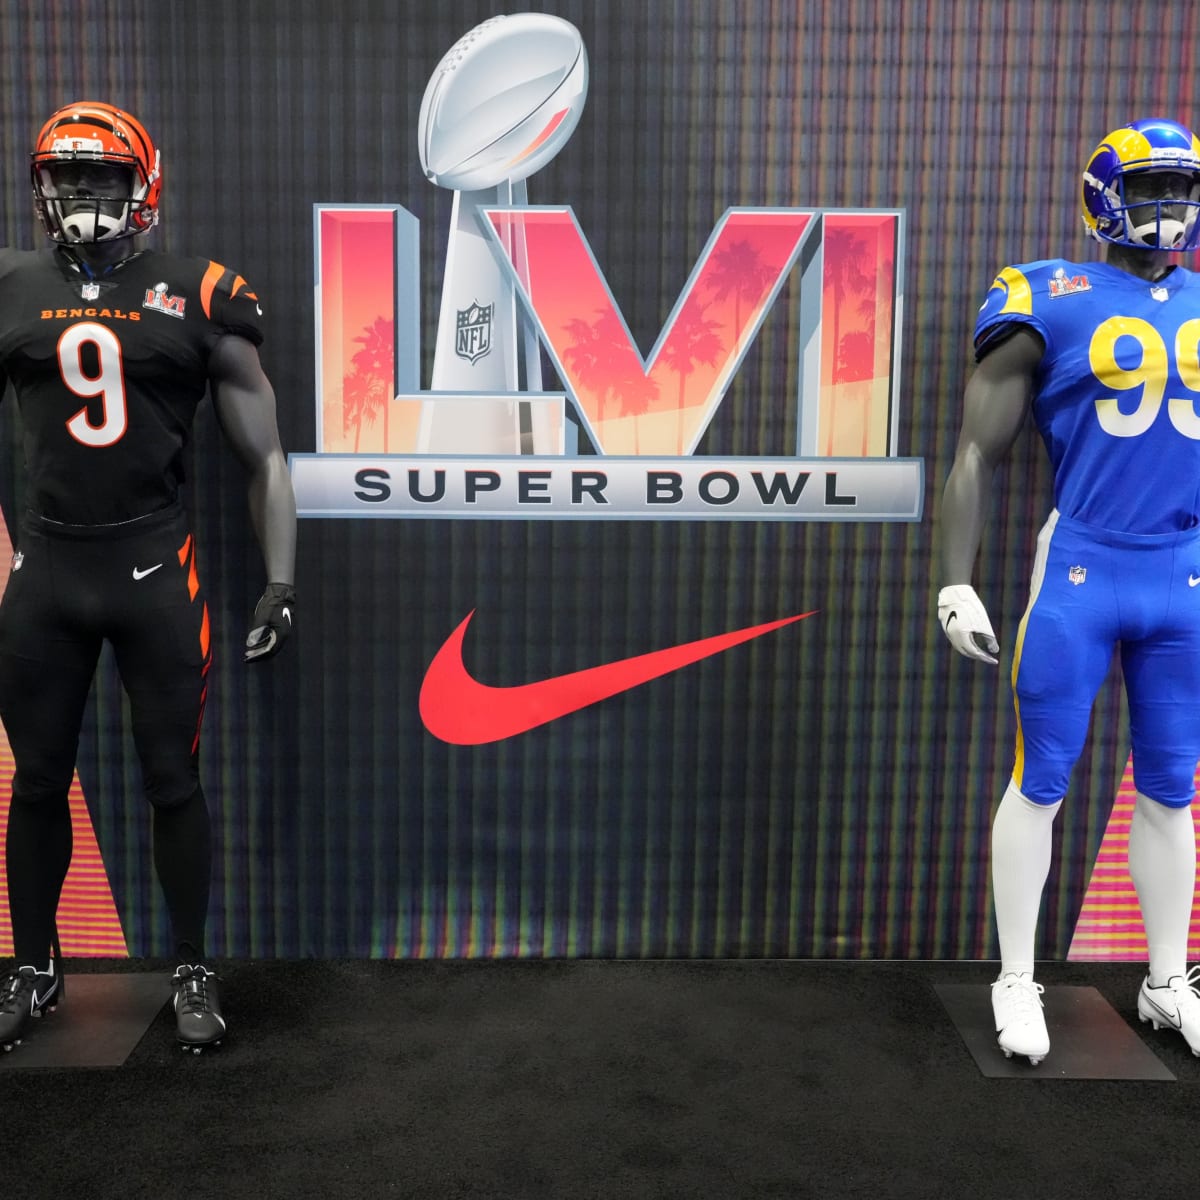 Rams Super Bowl Jerseys Get Gameday Ready With Super Bowl LVI